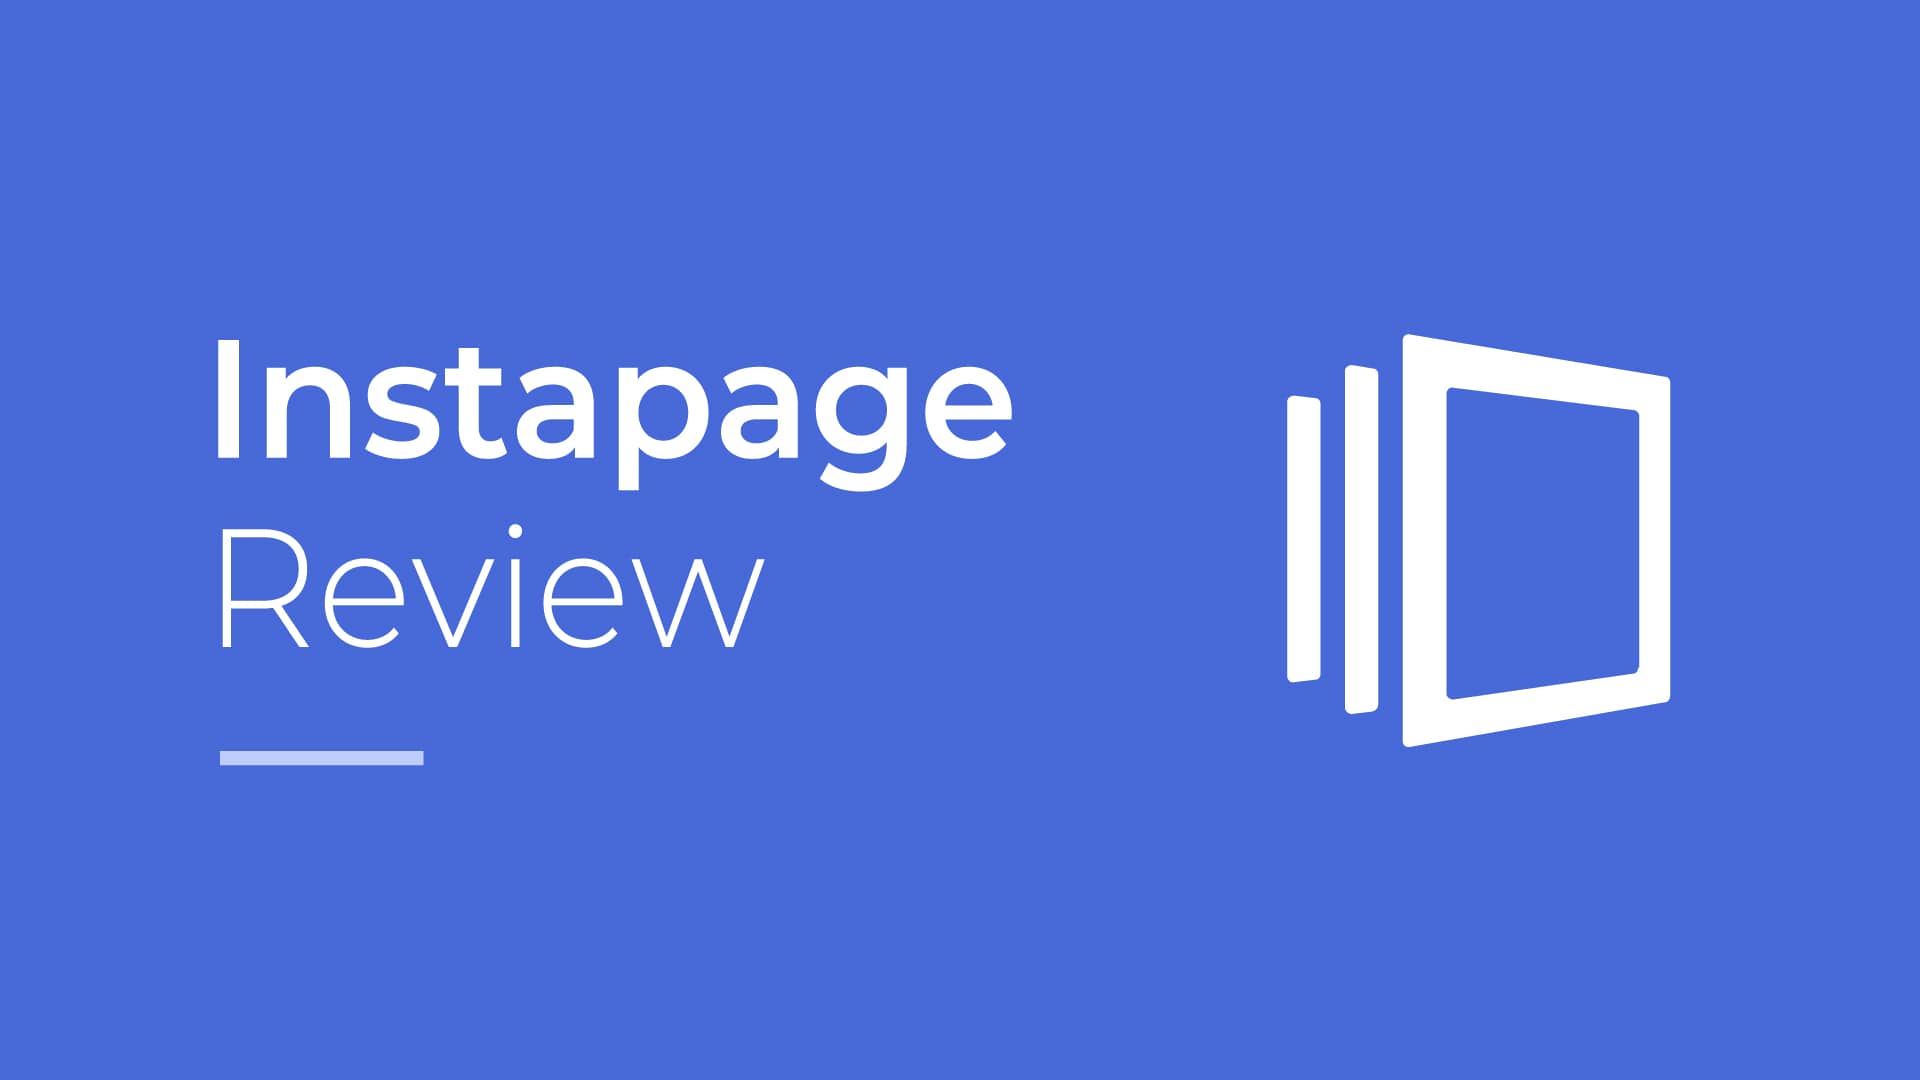 Instapage Review 2020 – The Premium Conversion Optimization Service